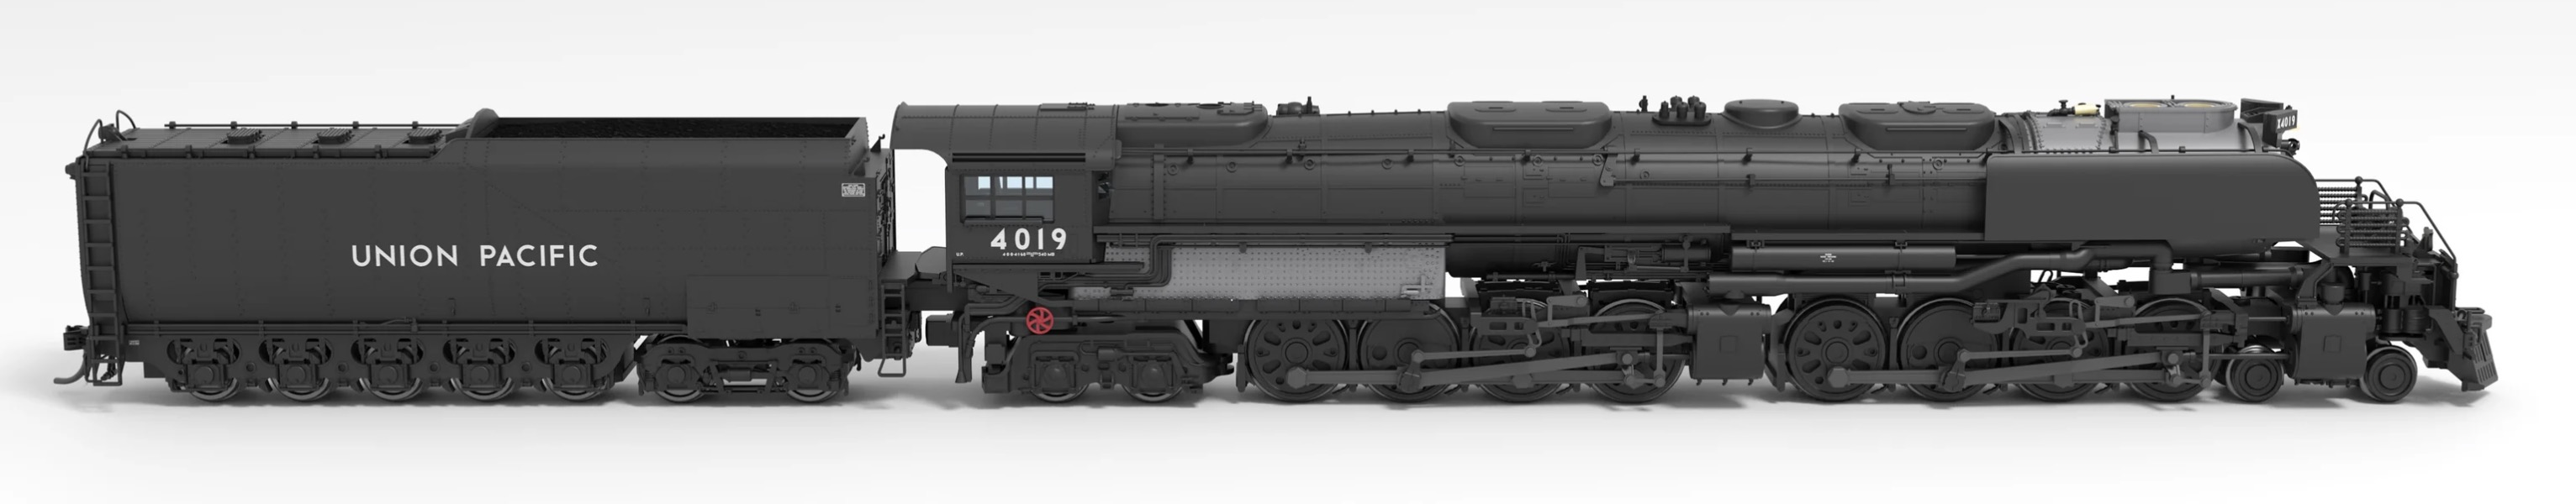 N Scale - Broadway Limited - 8996 - Locomotive, Steam, 4-8-8-4 Big Boy - Union Pacific - 4019